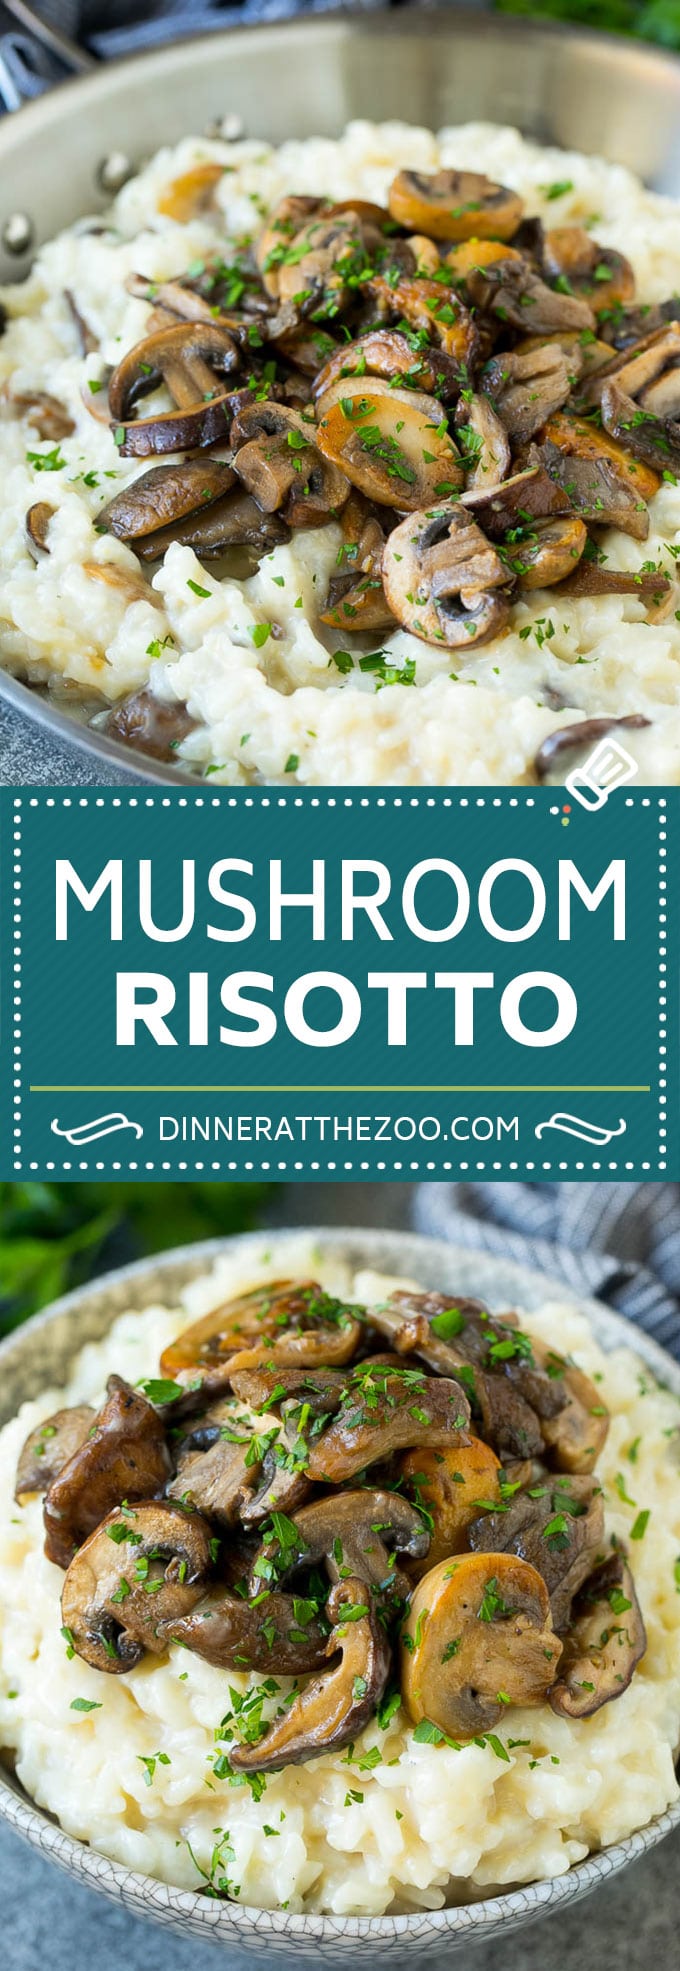 Mushroom Risotto Recipe | Mushroom Rice | Easy Risotto #rice #mushrooms #sidedish #glutenfree #dinner #dinneratthezoo